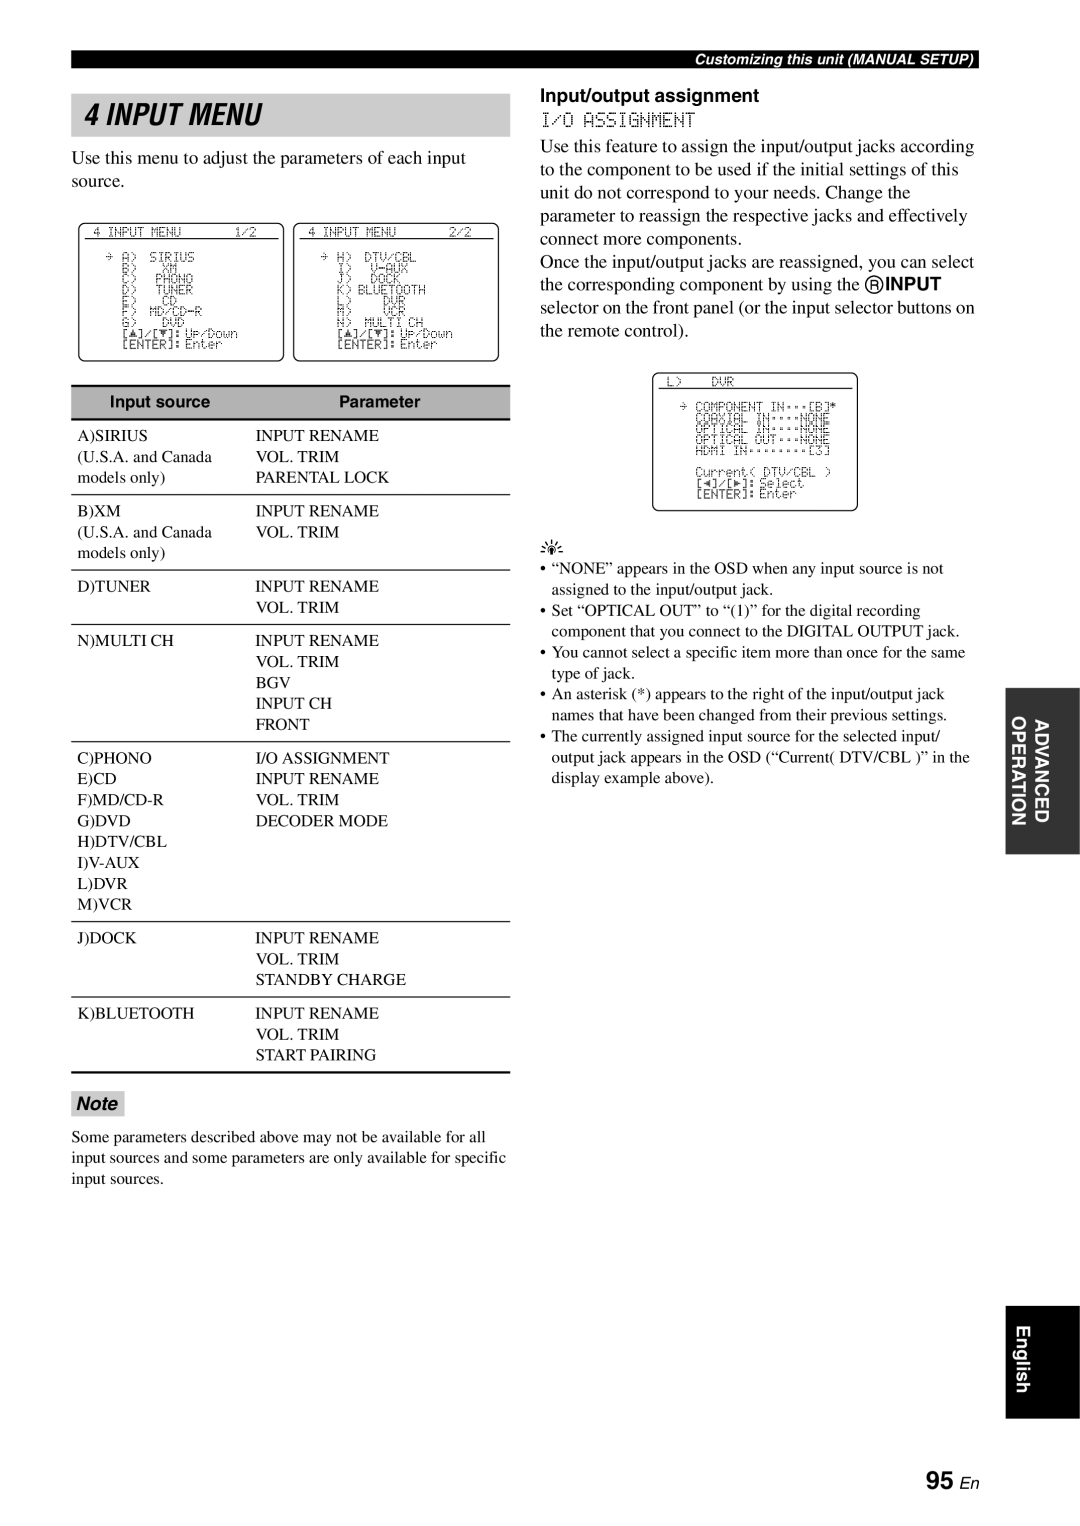 Yamaha RX-V863 owner manual Input Menu, 95 En 